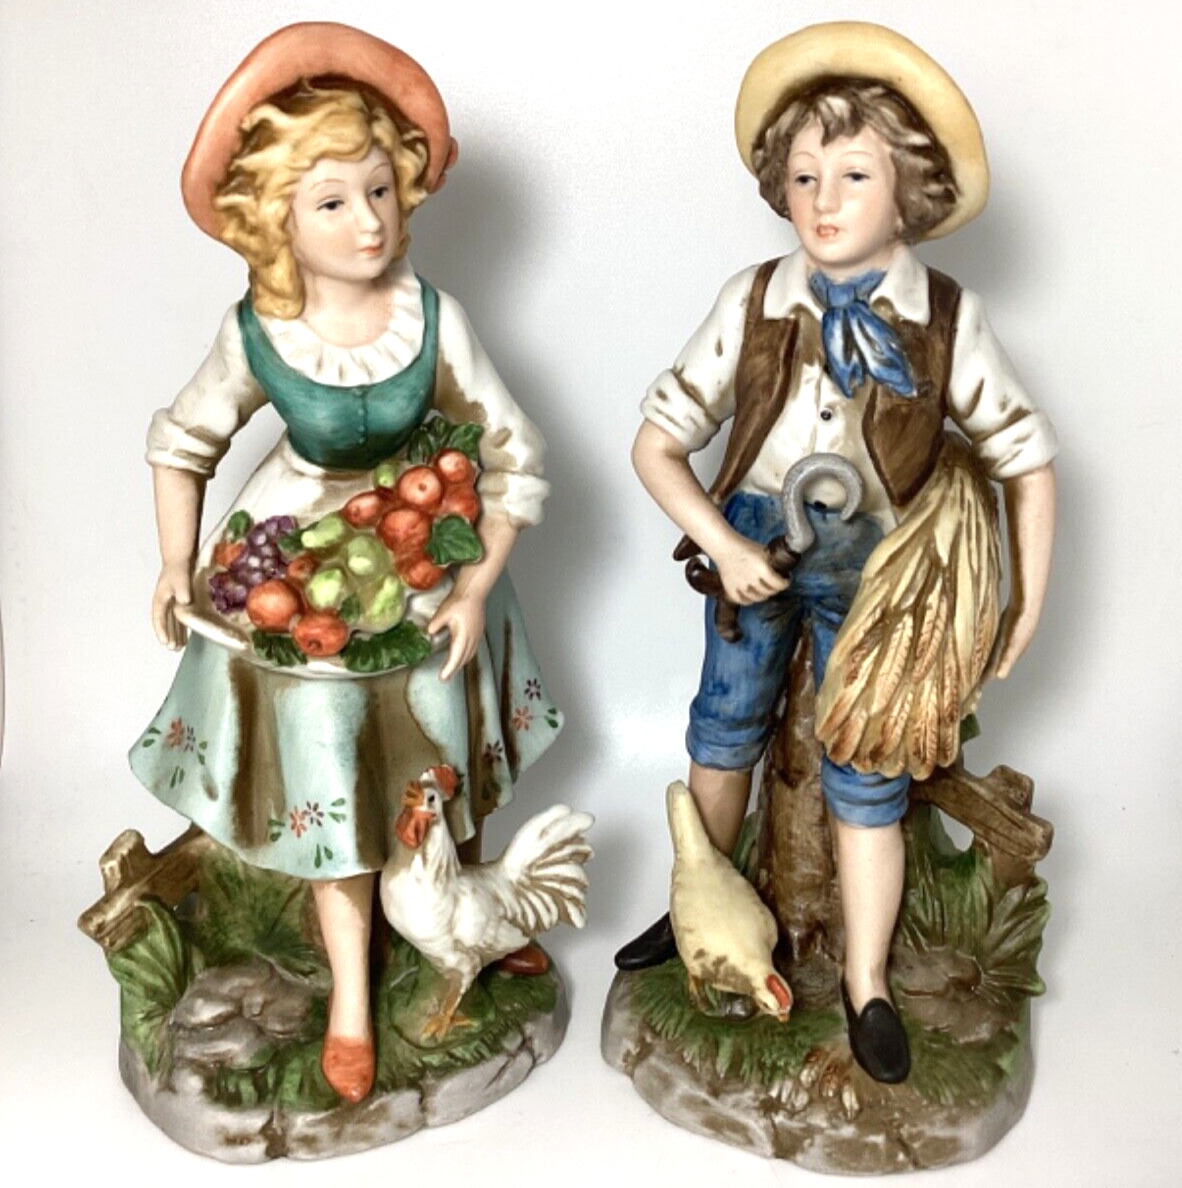 Homco #8881 Figurines Farm Girl Basket of Fruit & Boy with Wheat both w/ Chicken